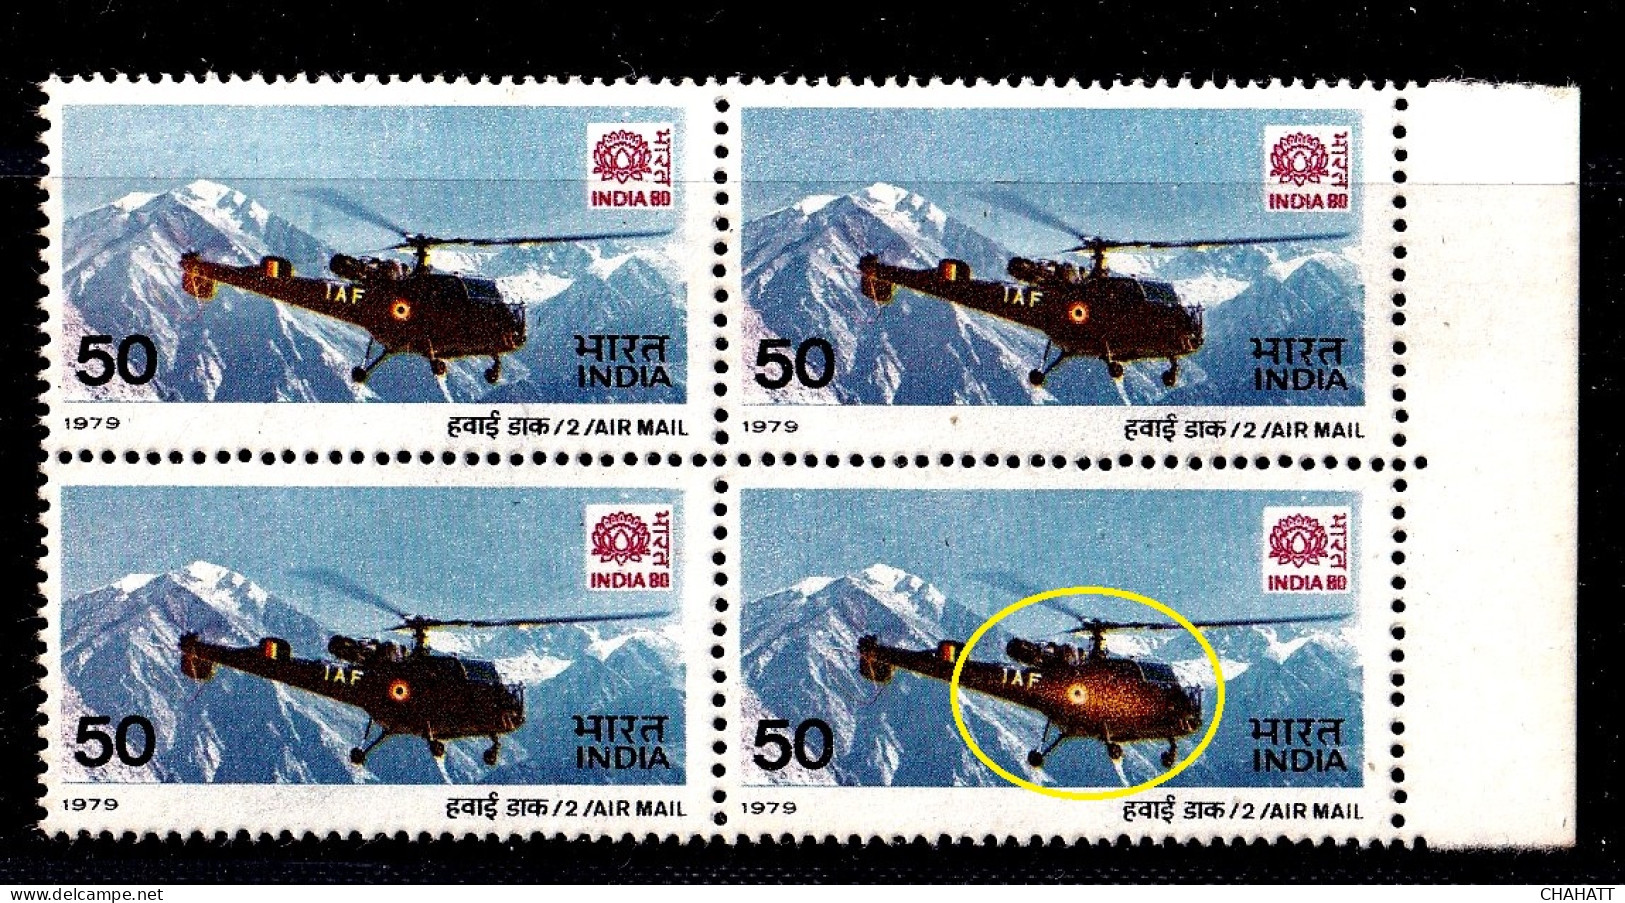 INDIA-1979- AIRMAIL-HELICOPTERS-50p- ERROR-COLOR VARIETY - BLOCK OF 4- H2-25 - Varietà & Curiosità